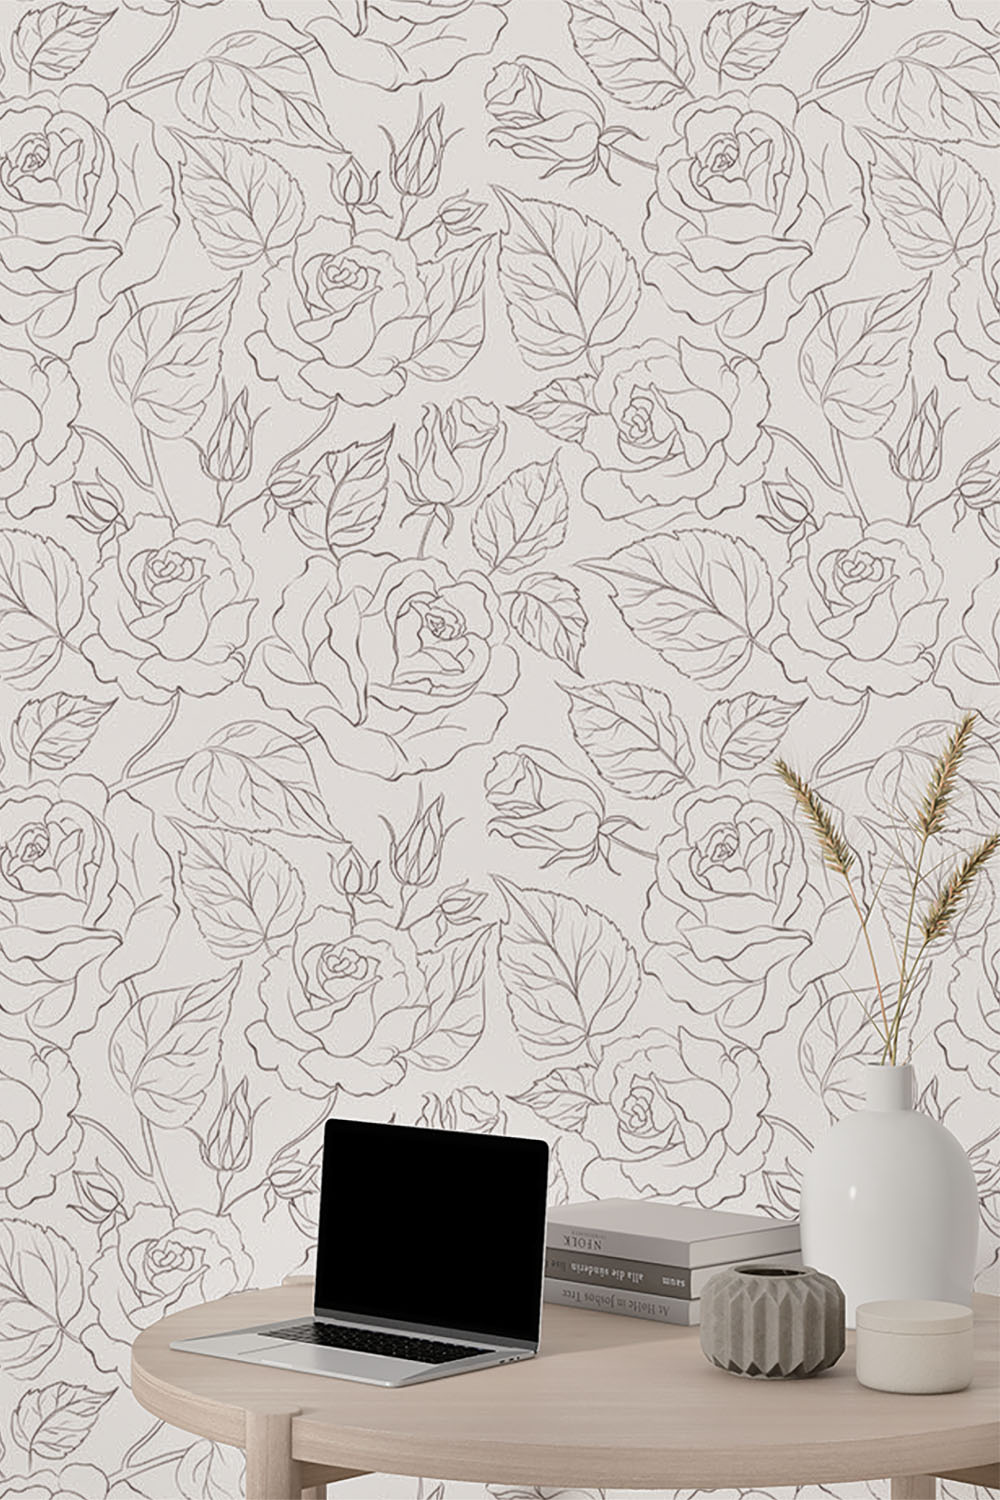 rose-and-leaves-sketch-outline-wallpaper-sample